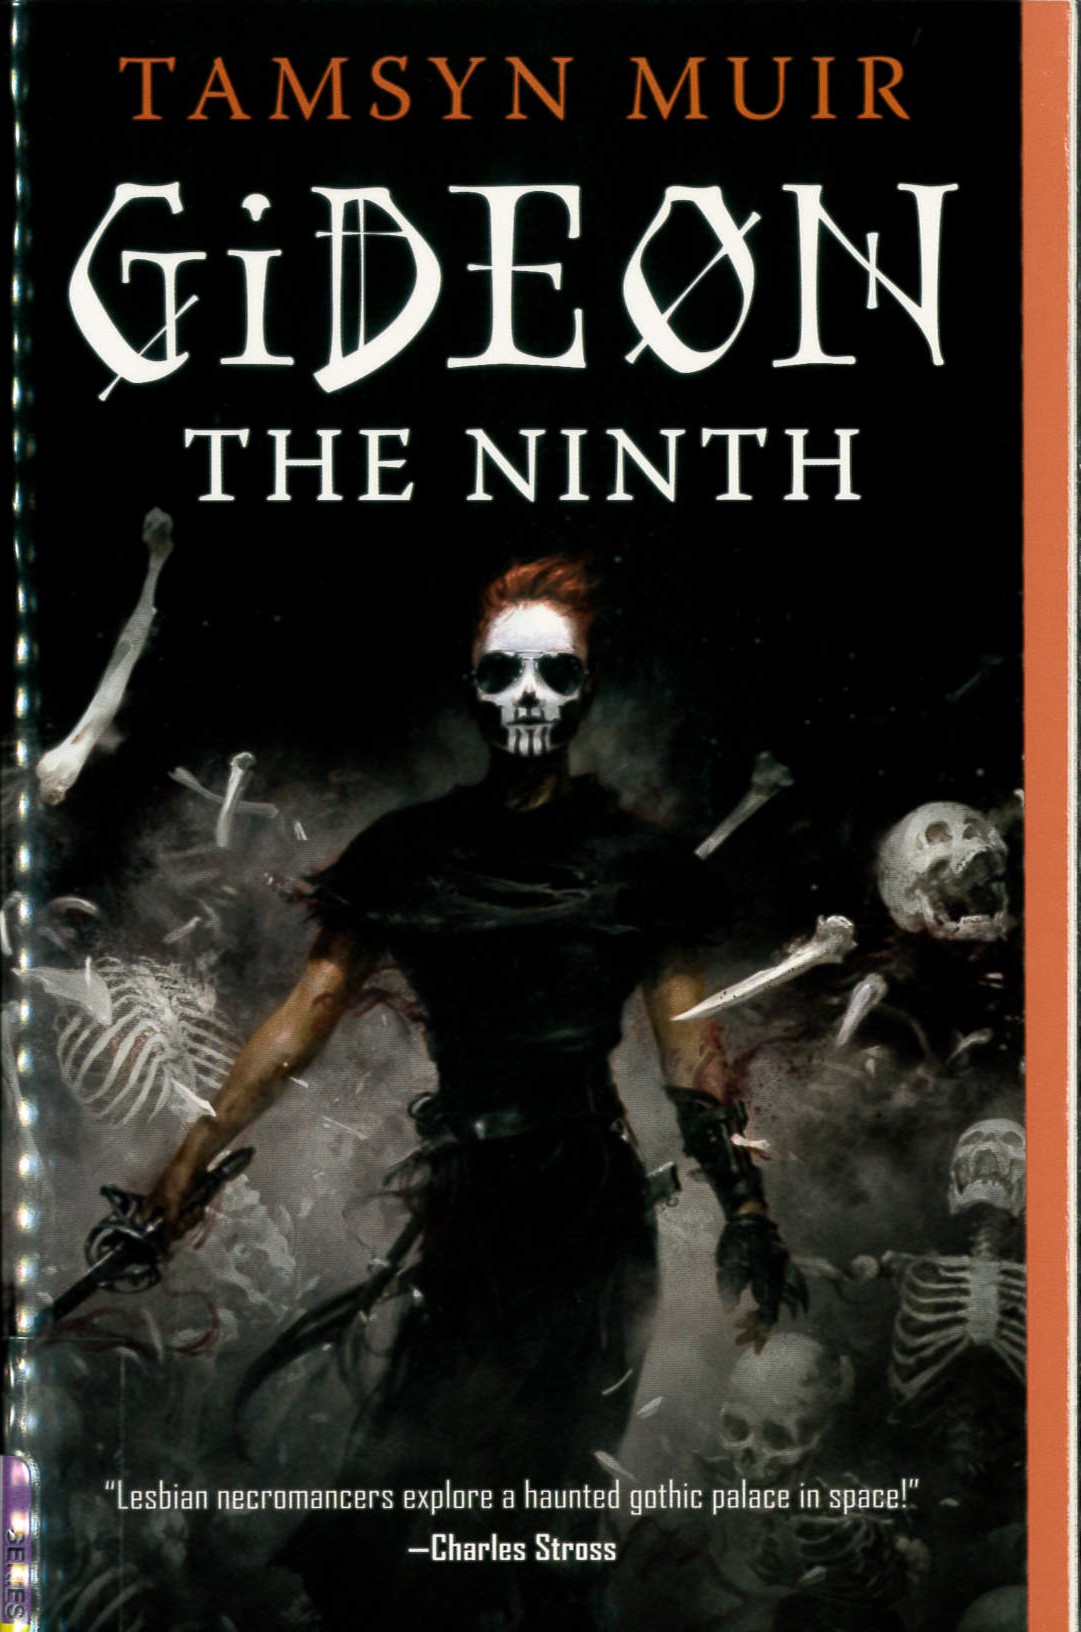 Gideon the ninth /